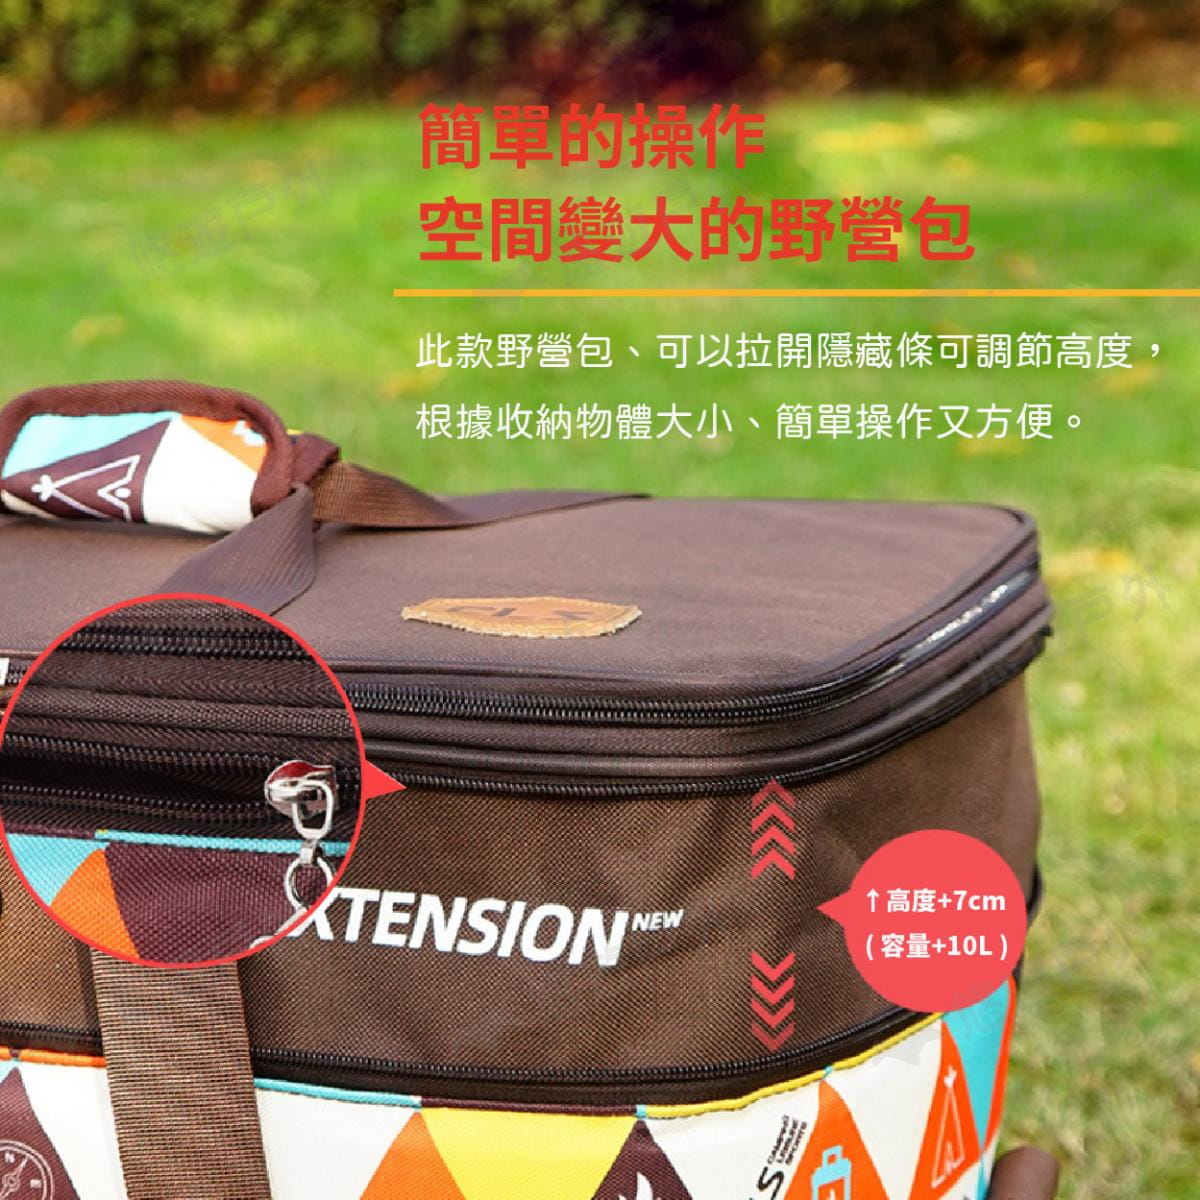 【CLS】韓國 旅行野餐包 50L大容量 野營包 可調節高度 收納包 露營手提包 自駕旅行 野餐包 2